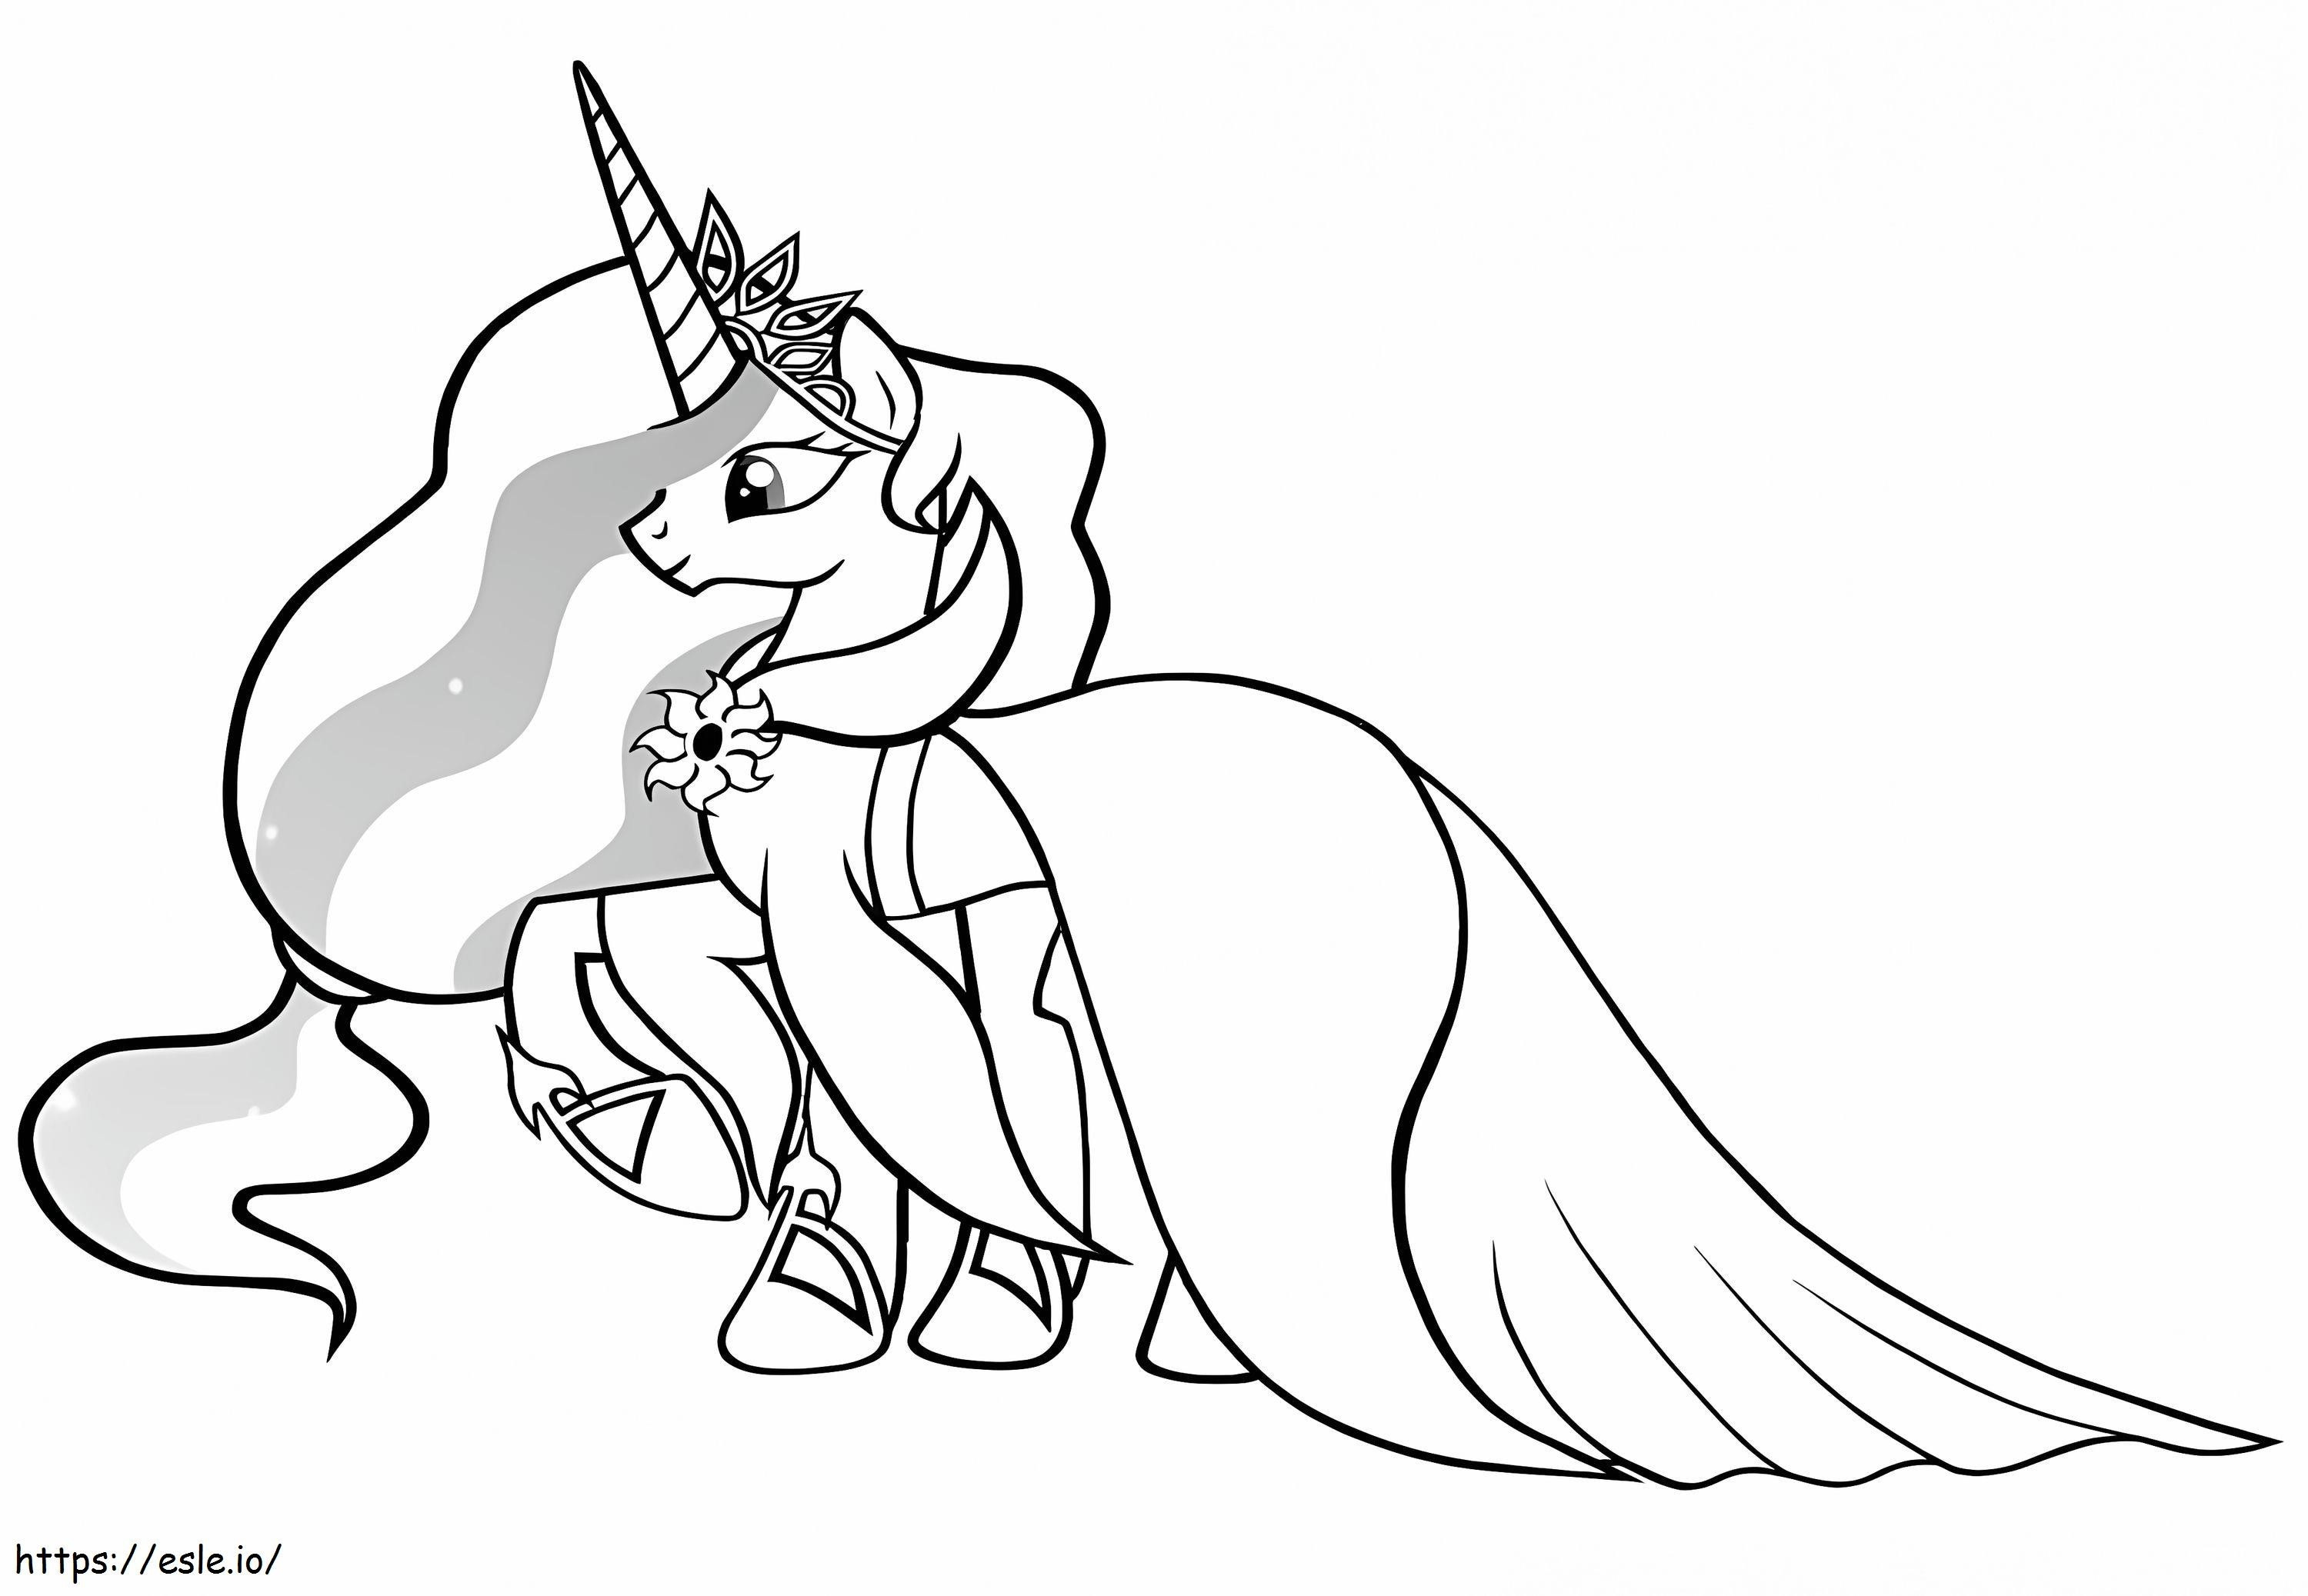 Princess celestia coloring page